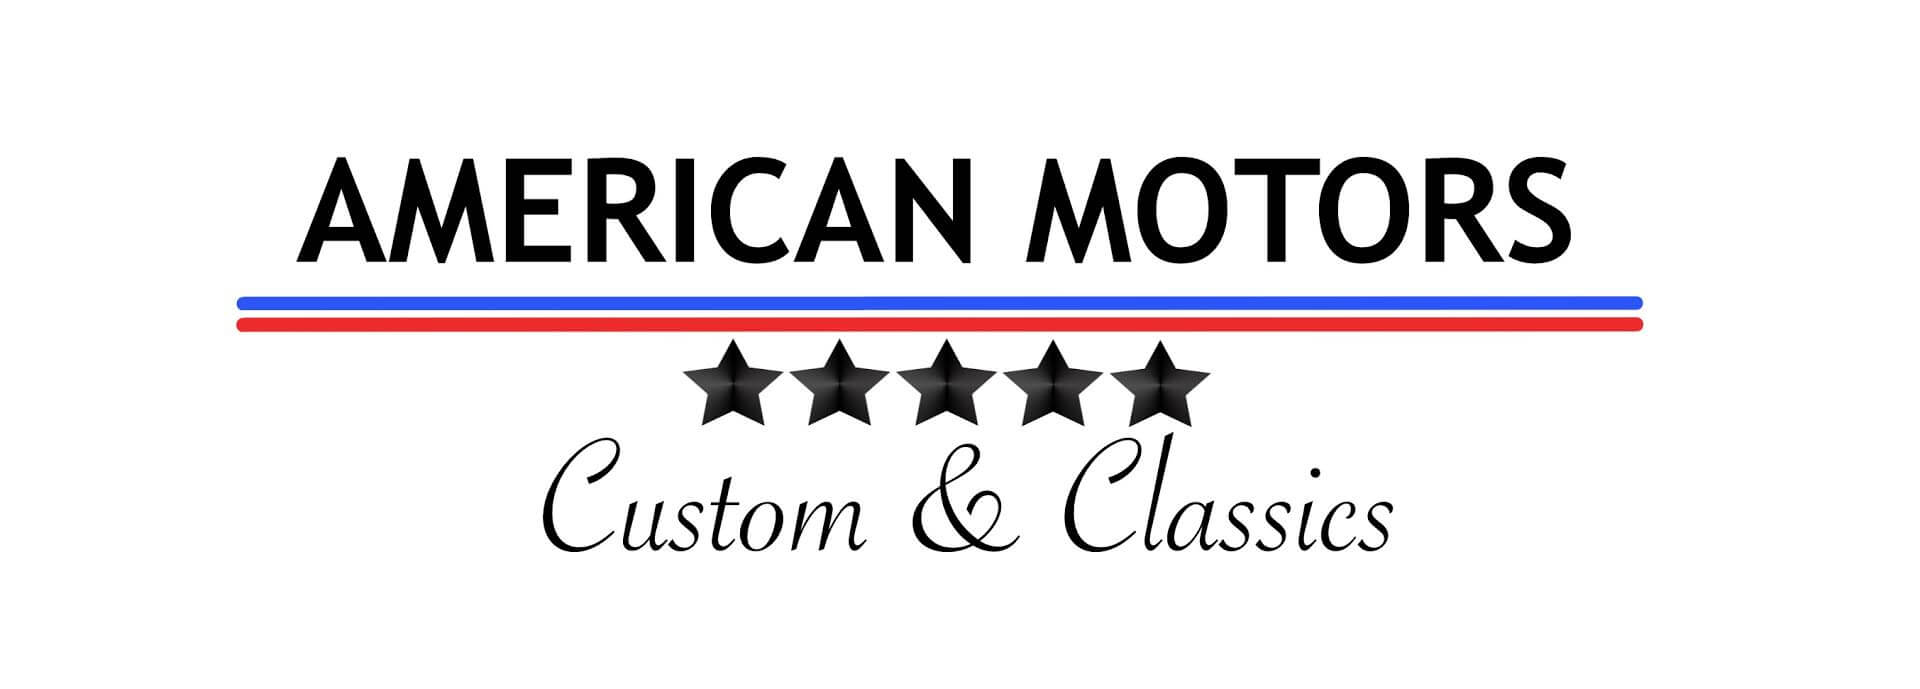 American Motors Logo - American Motors Custom & Classics - Classics Cars Restored | San ...